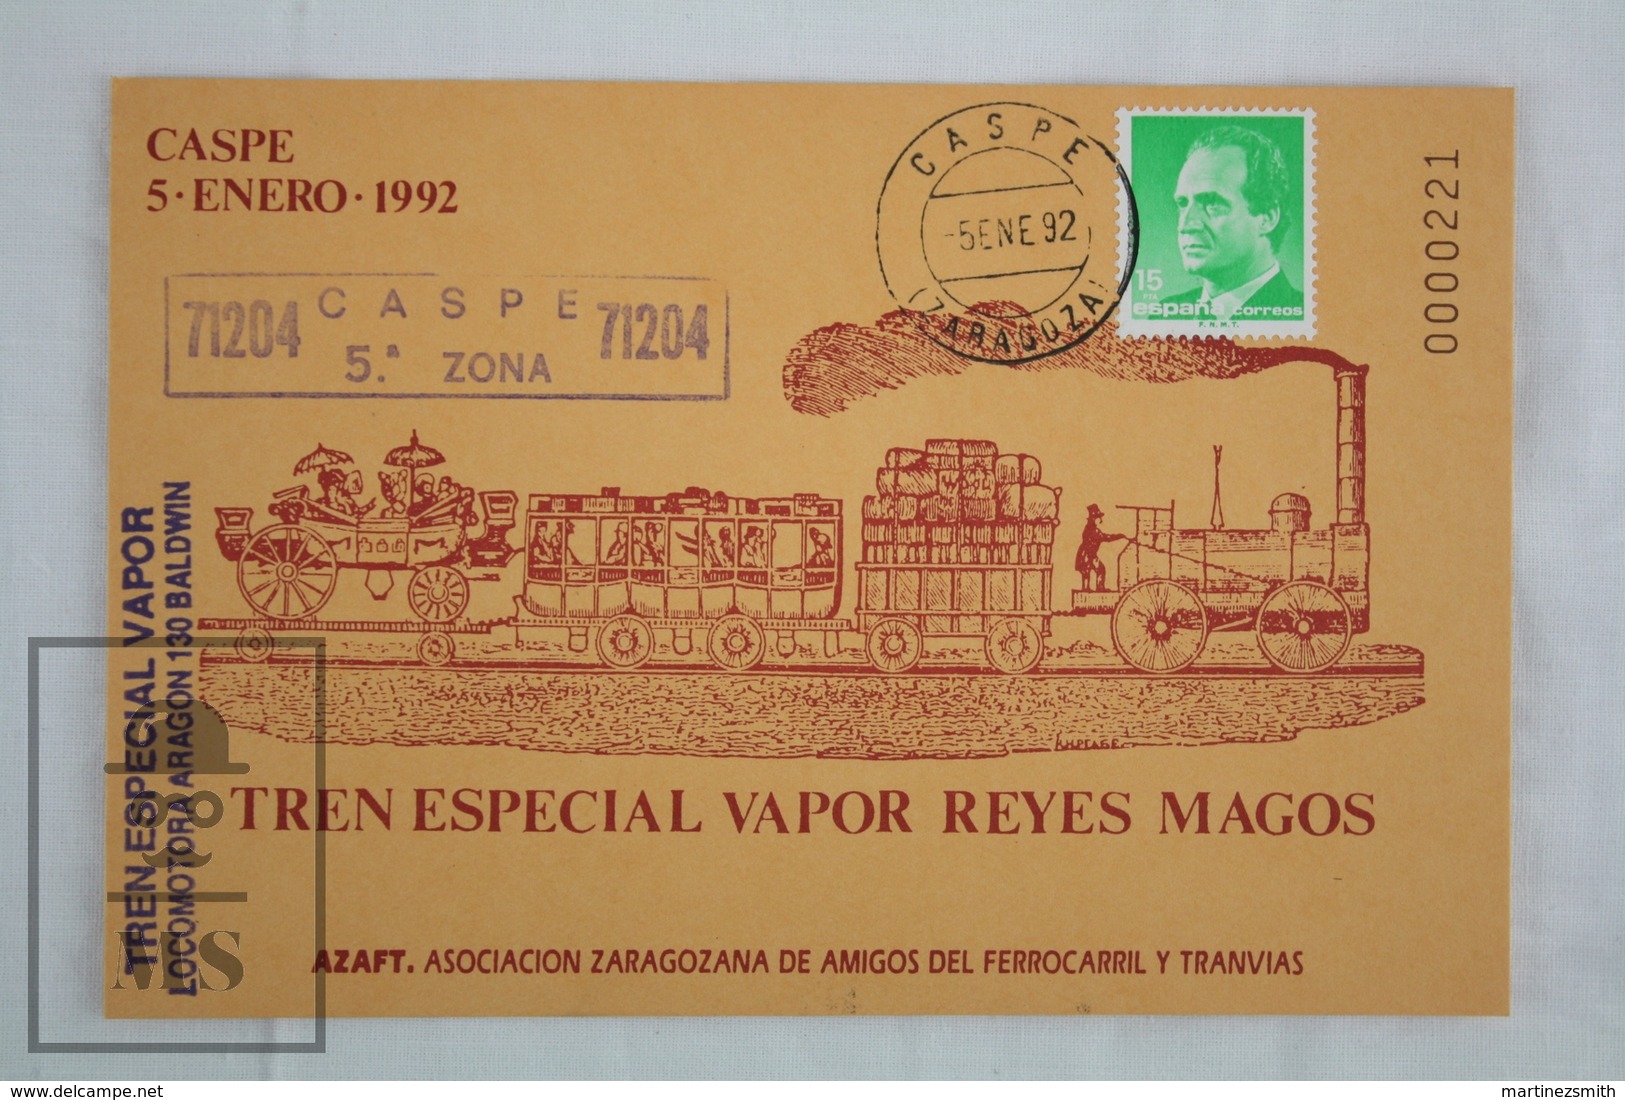 Spanish Railway/ Train Topic Cover - Special Steam Train - Aragon 130 Baldwin Locomotive - Posted 1992 Caspe - Trenes